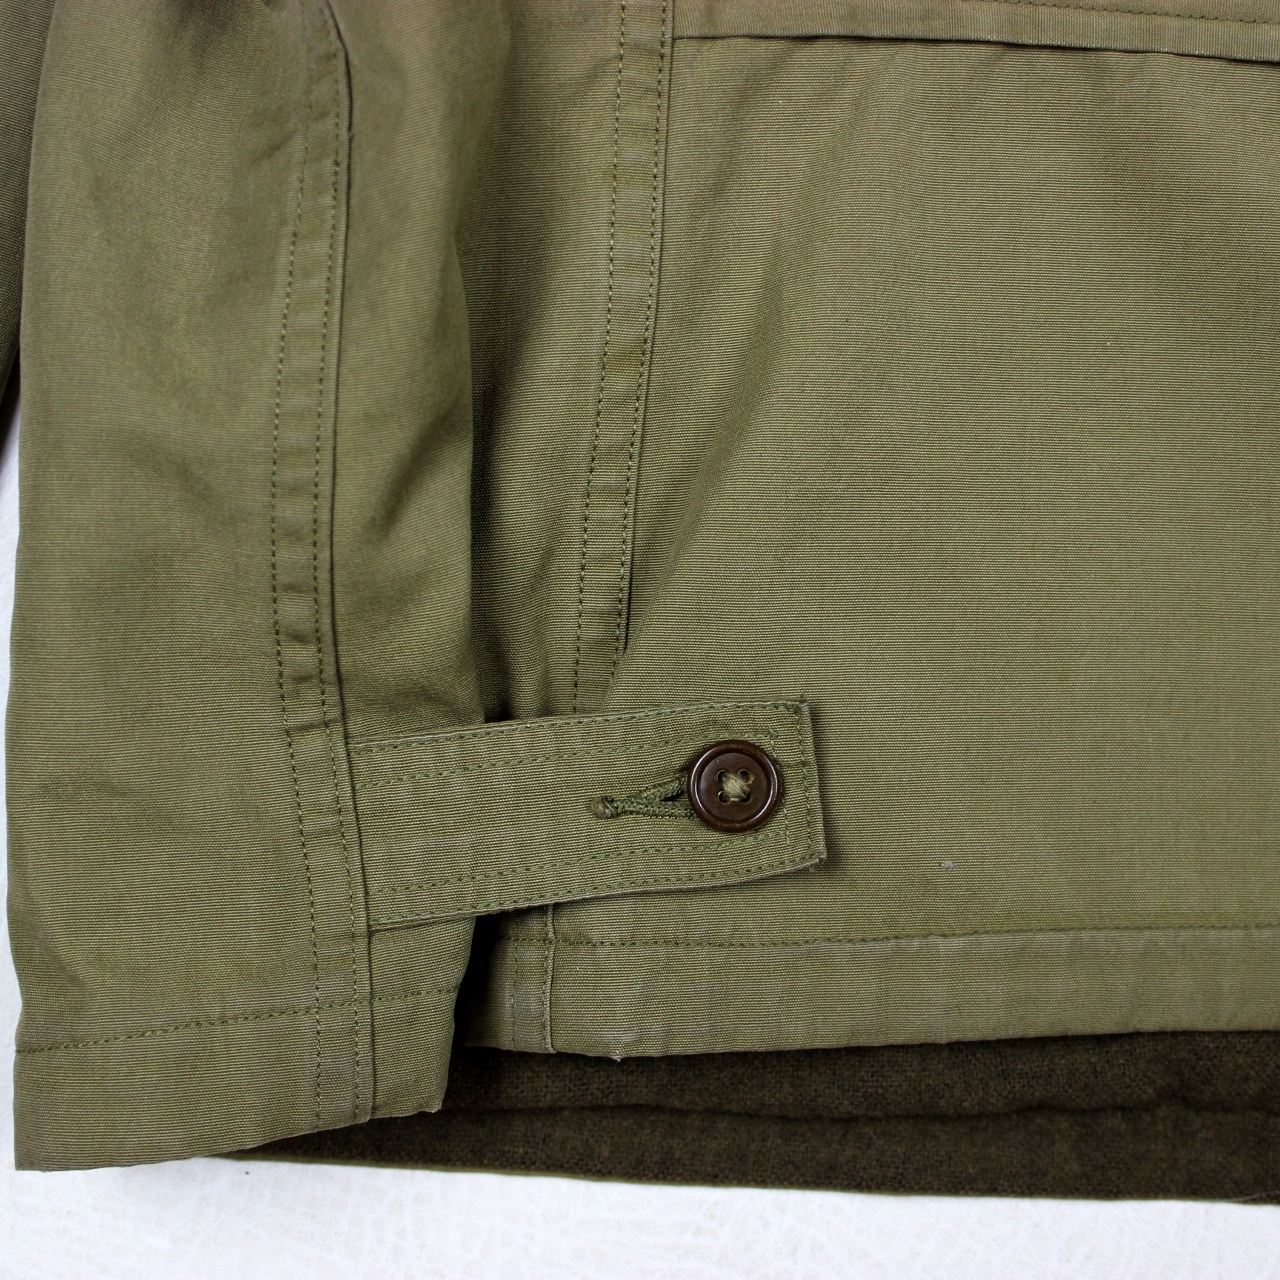 M1938 Parson's field jacket - Size 40R